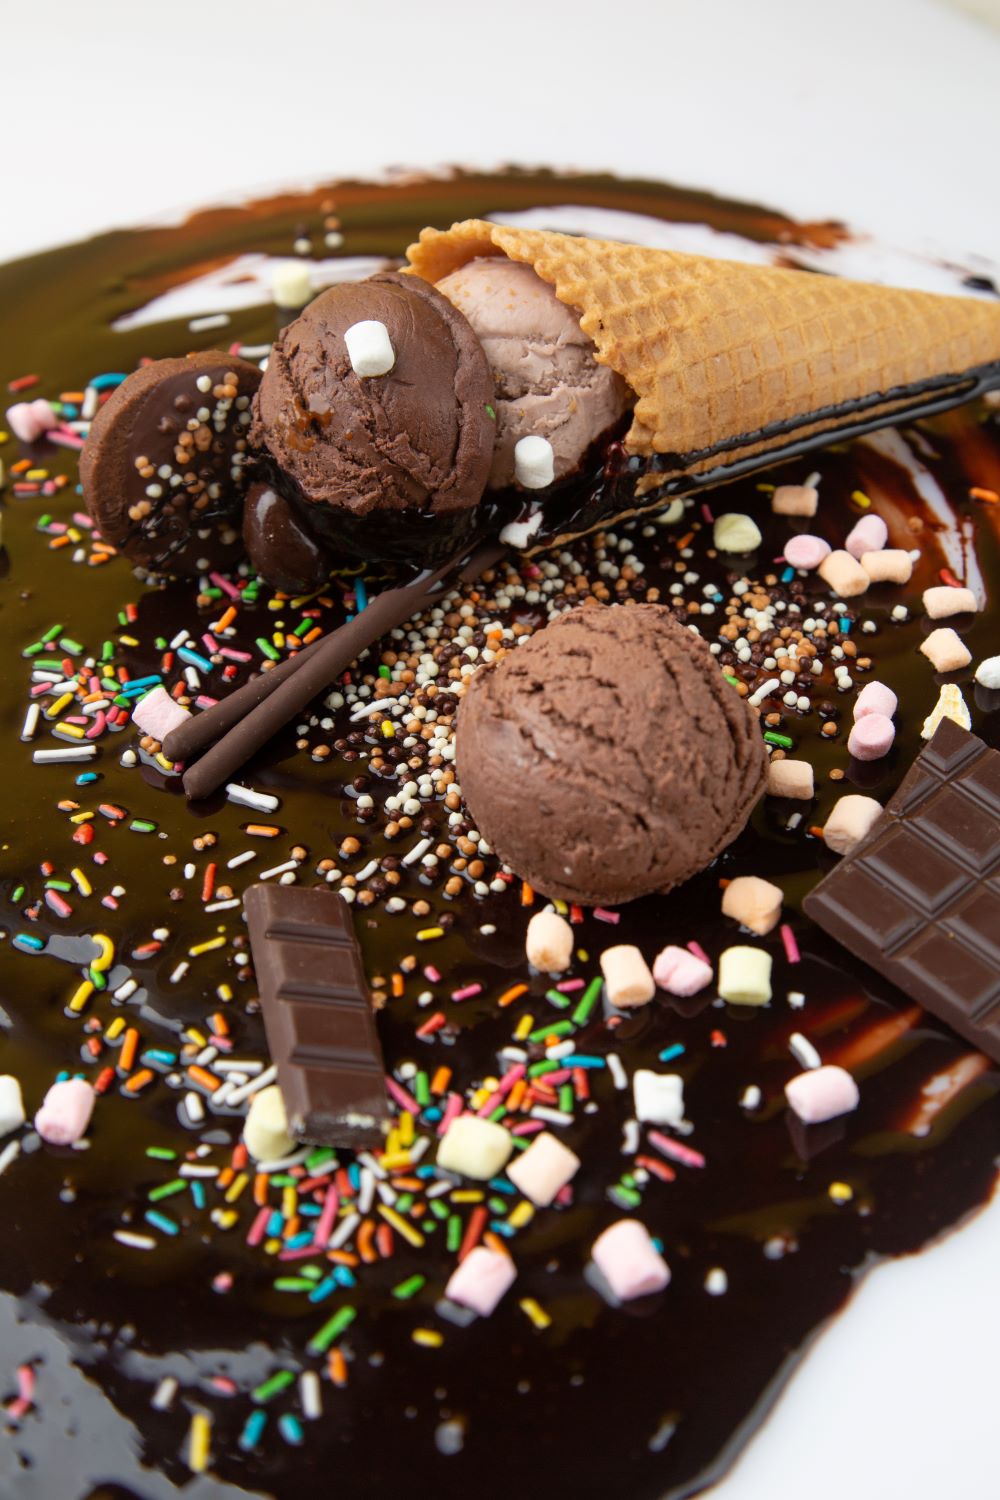 Chocolate ice cream cone lying in chocolate sauce